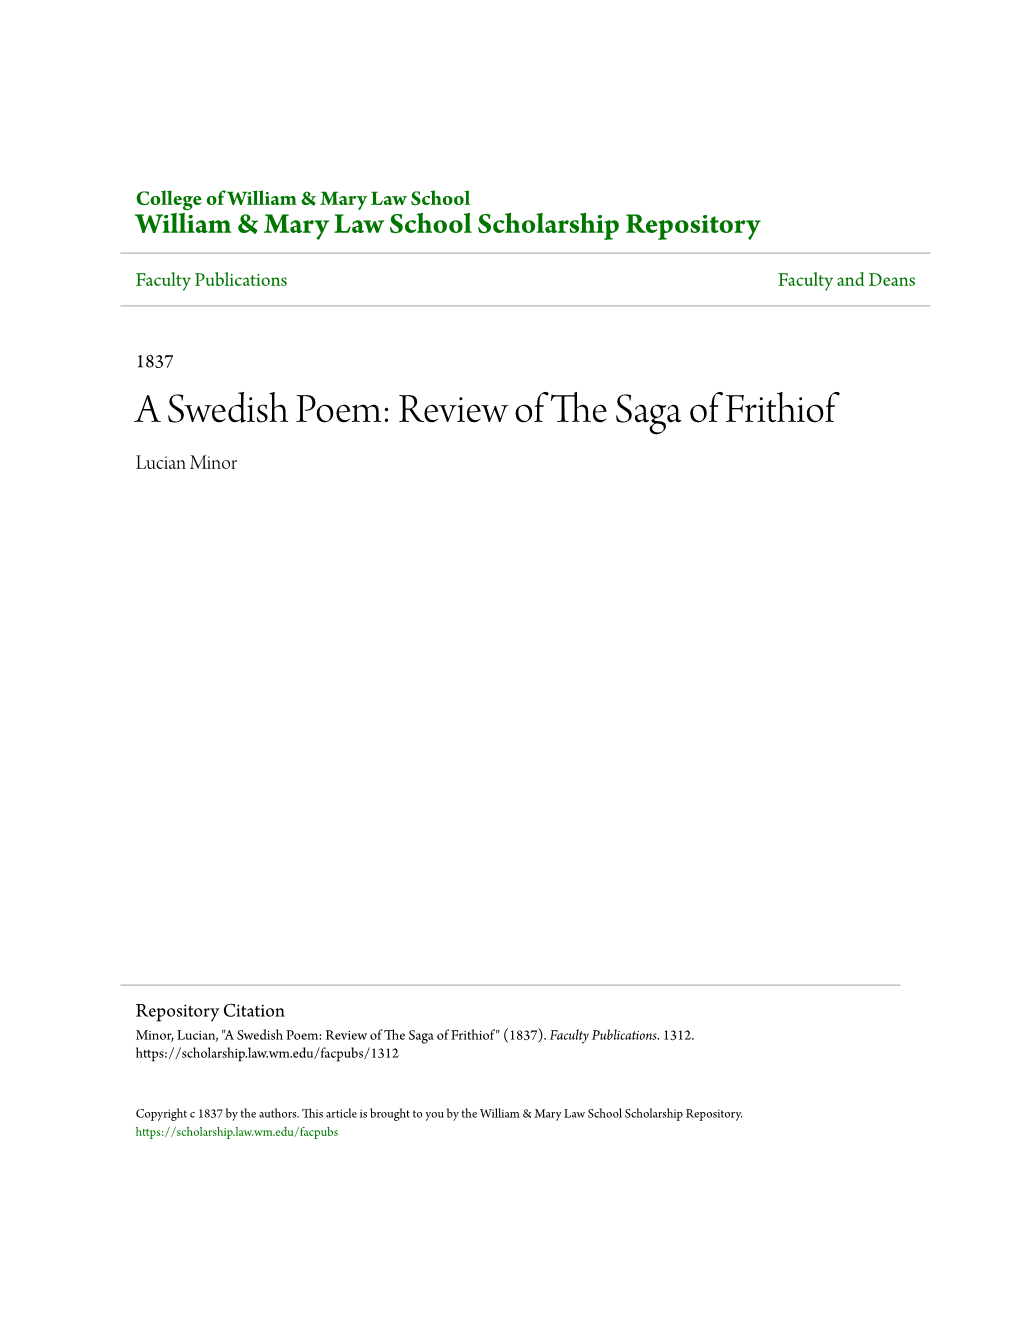 A Swedish Poem: Review of the Saga of Frithiof